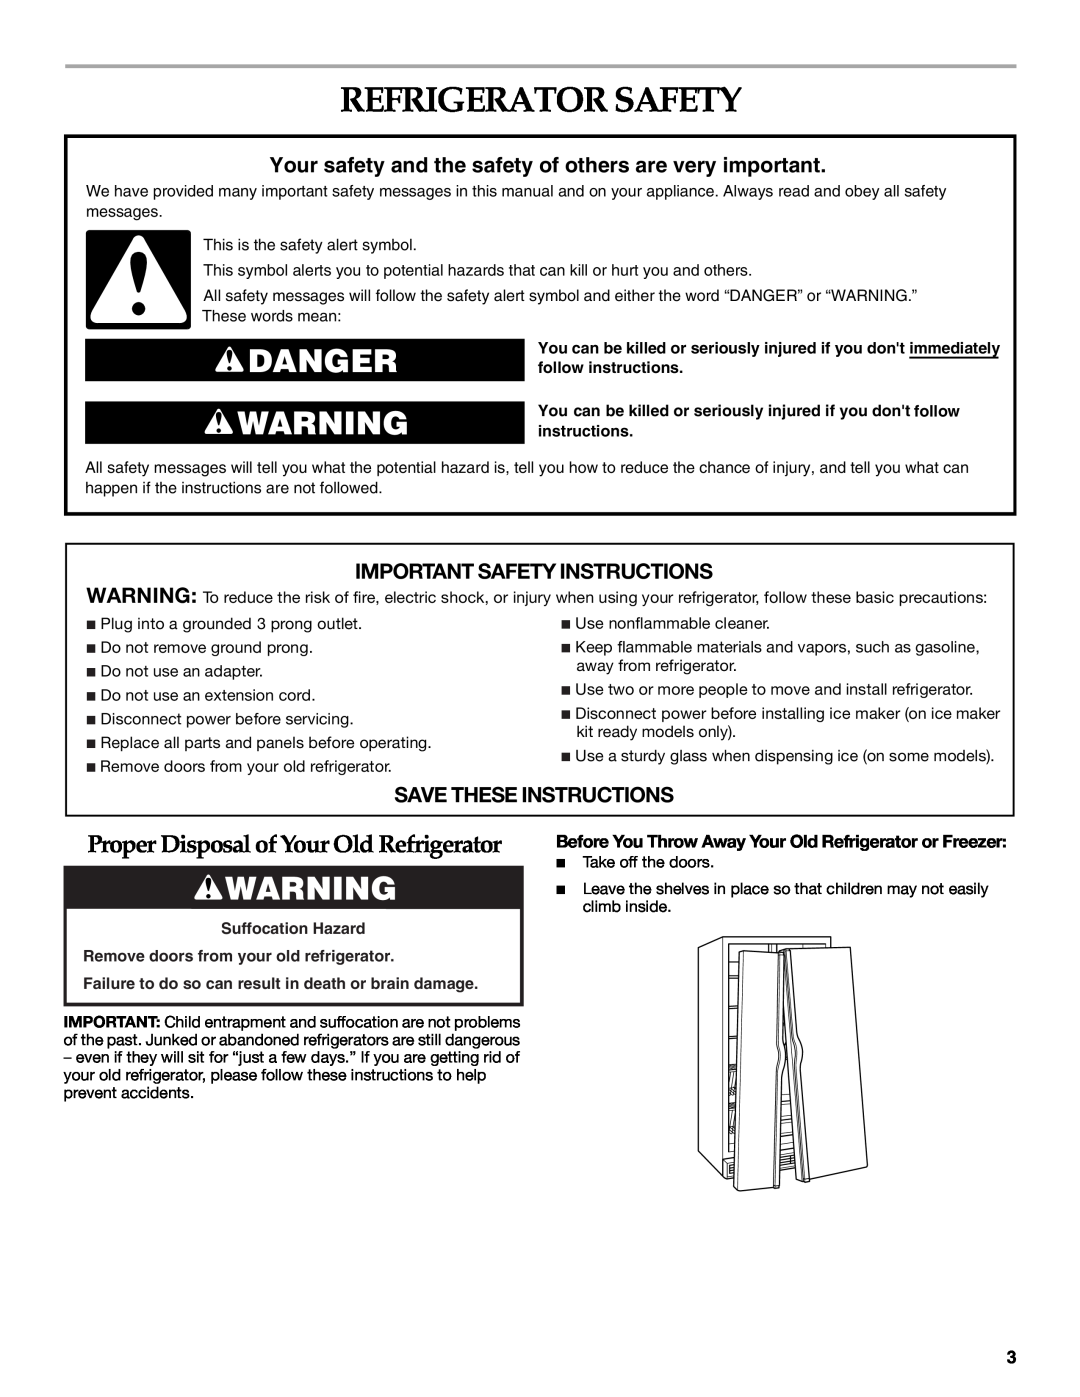 KitchenAid 2318581 Refrigerator Safety, Danger, Proper Disposal ofYour Old Refrigerator, Important Safety Instructions 